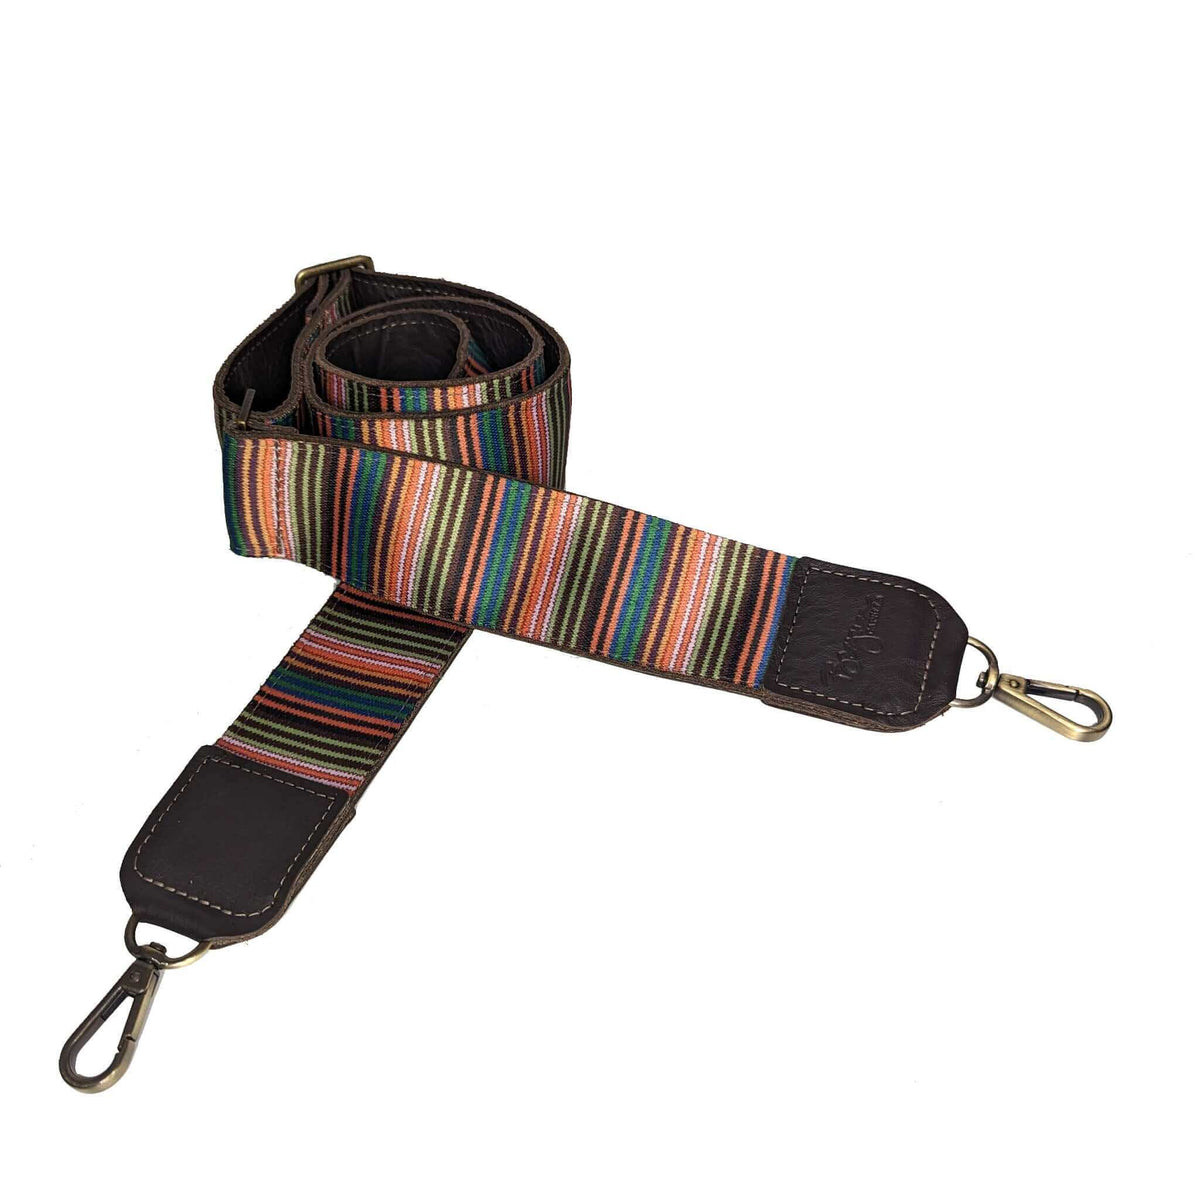 Colorful Striped Lizzy Guitar purse strap, Brynn Capella, made in the USA